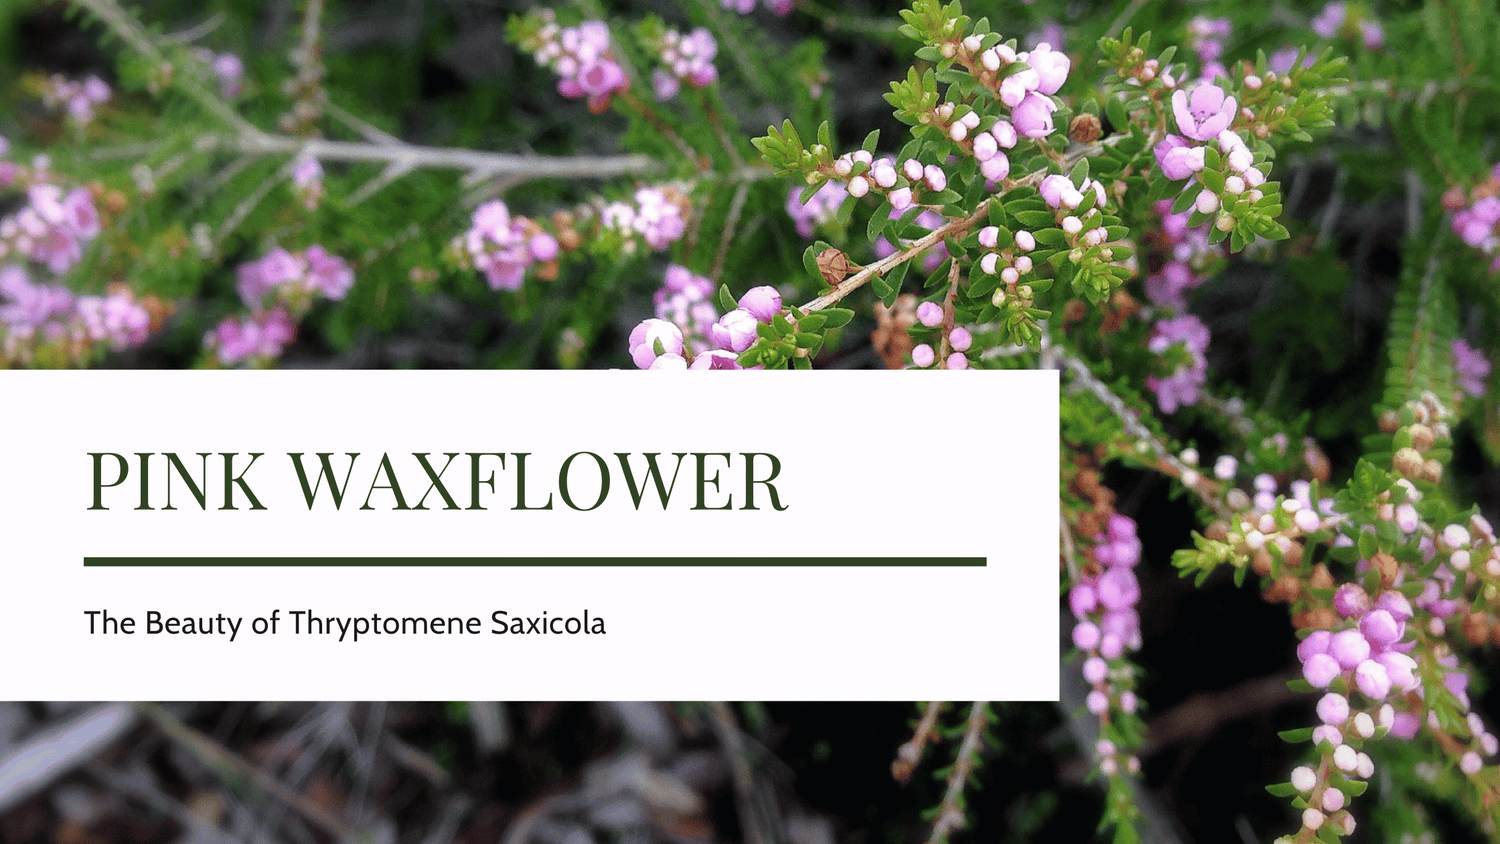 Australian Thryptomene Saxicola: A Friendly Guide To Pink Waxflower